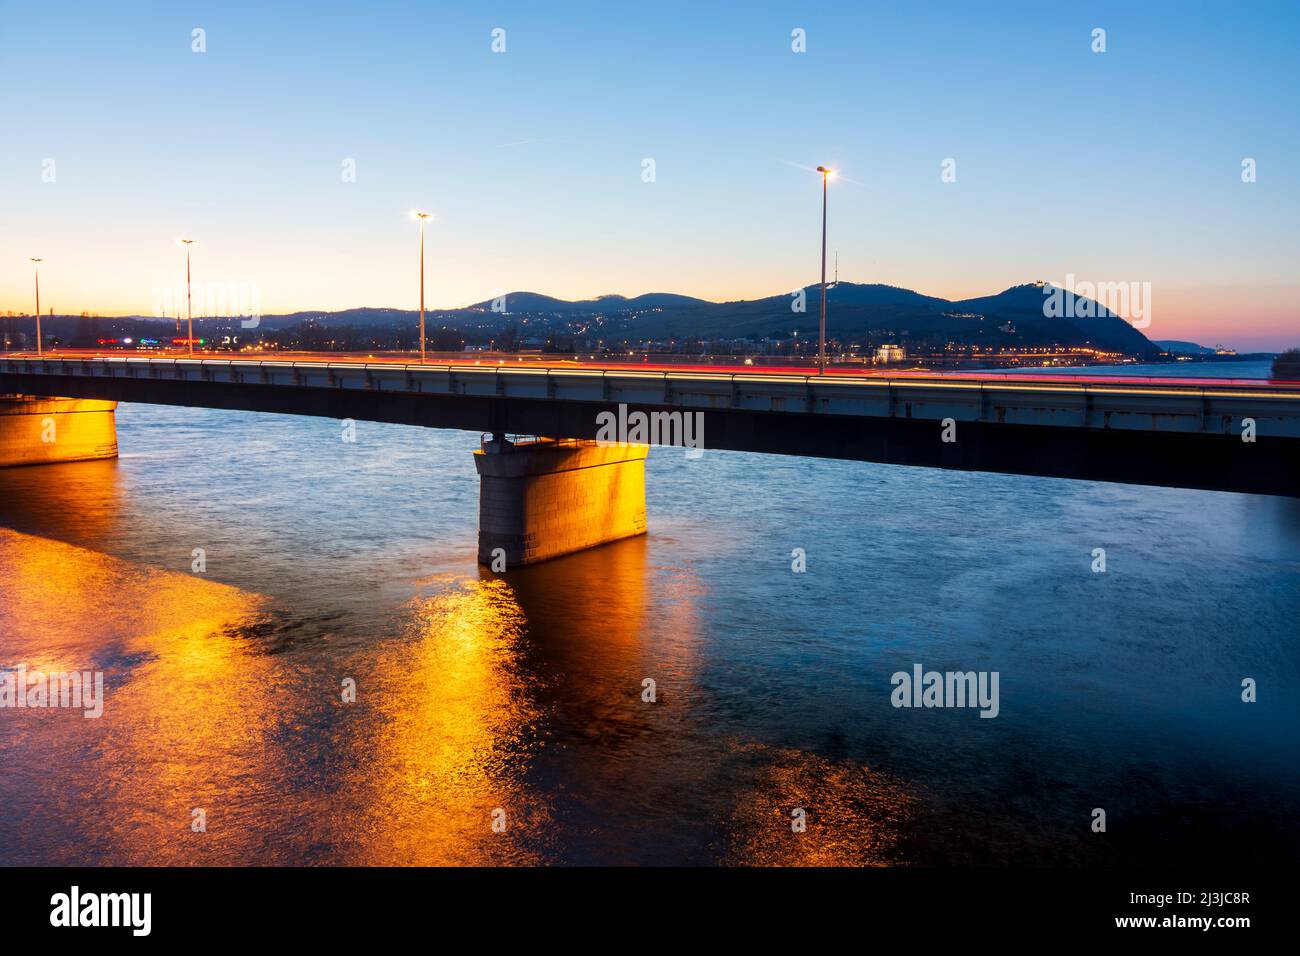 Freeway bridge nordbrucke hi-res stock photography and images - Alamy